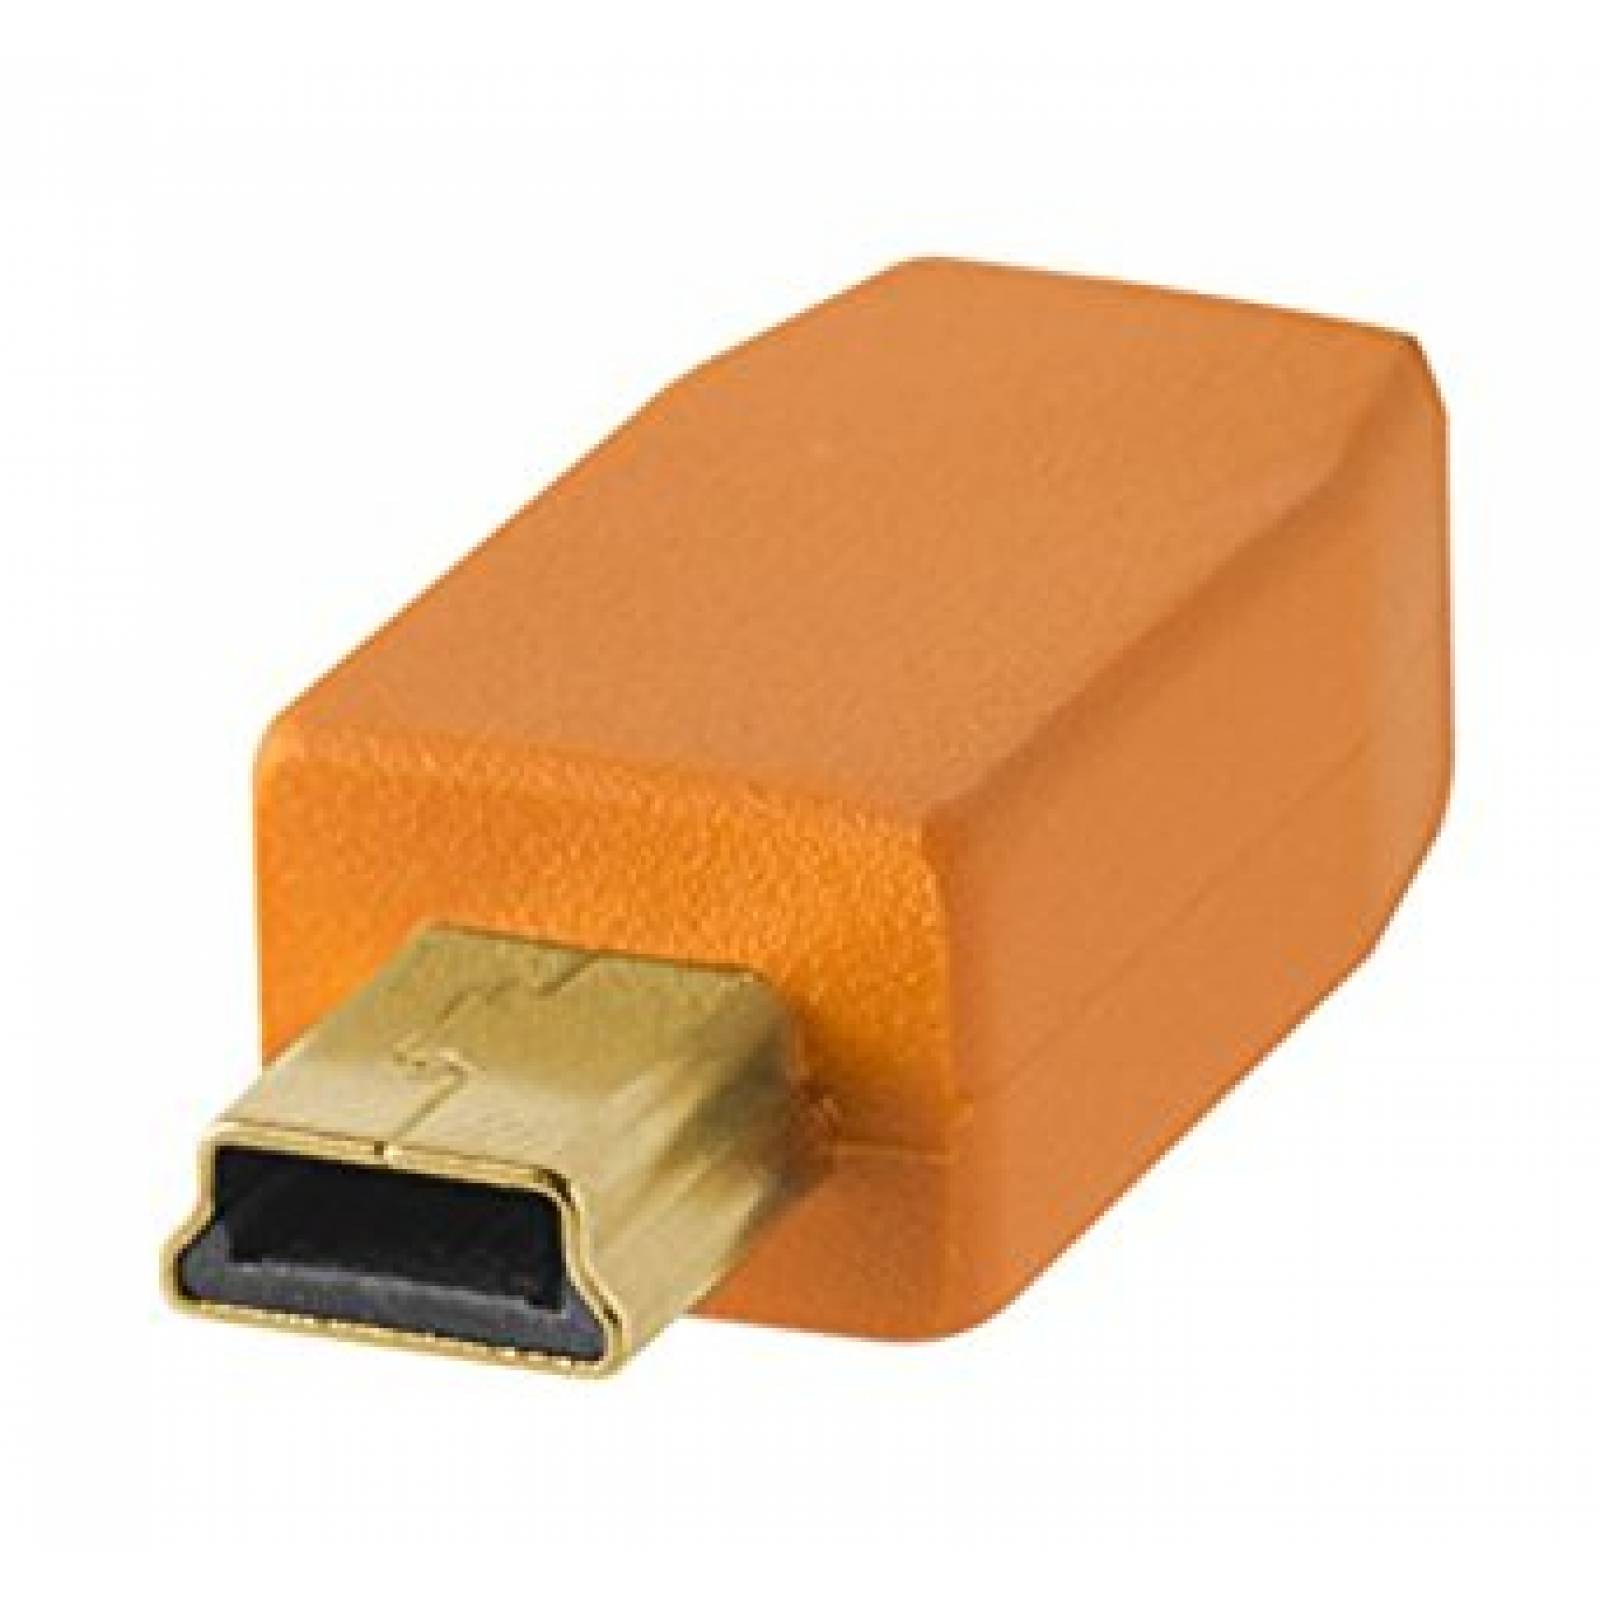 Cable Tools Tetherpro Usb 2.0 A Mini-b 5 Pin -naranja